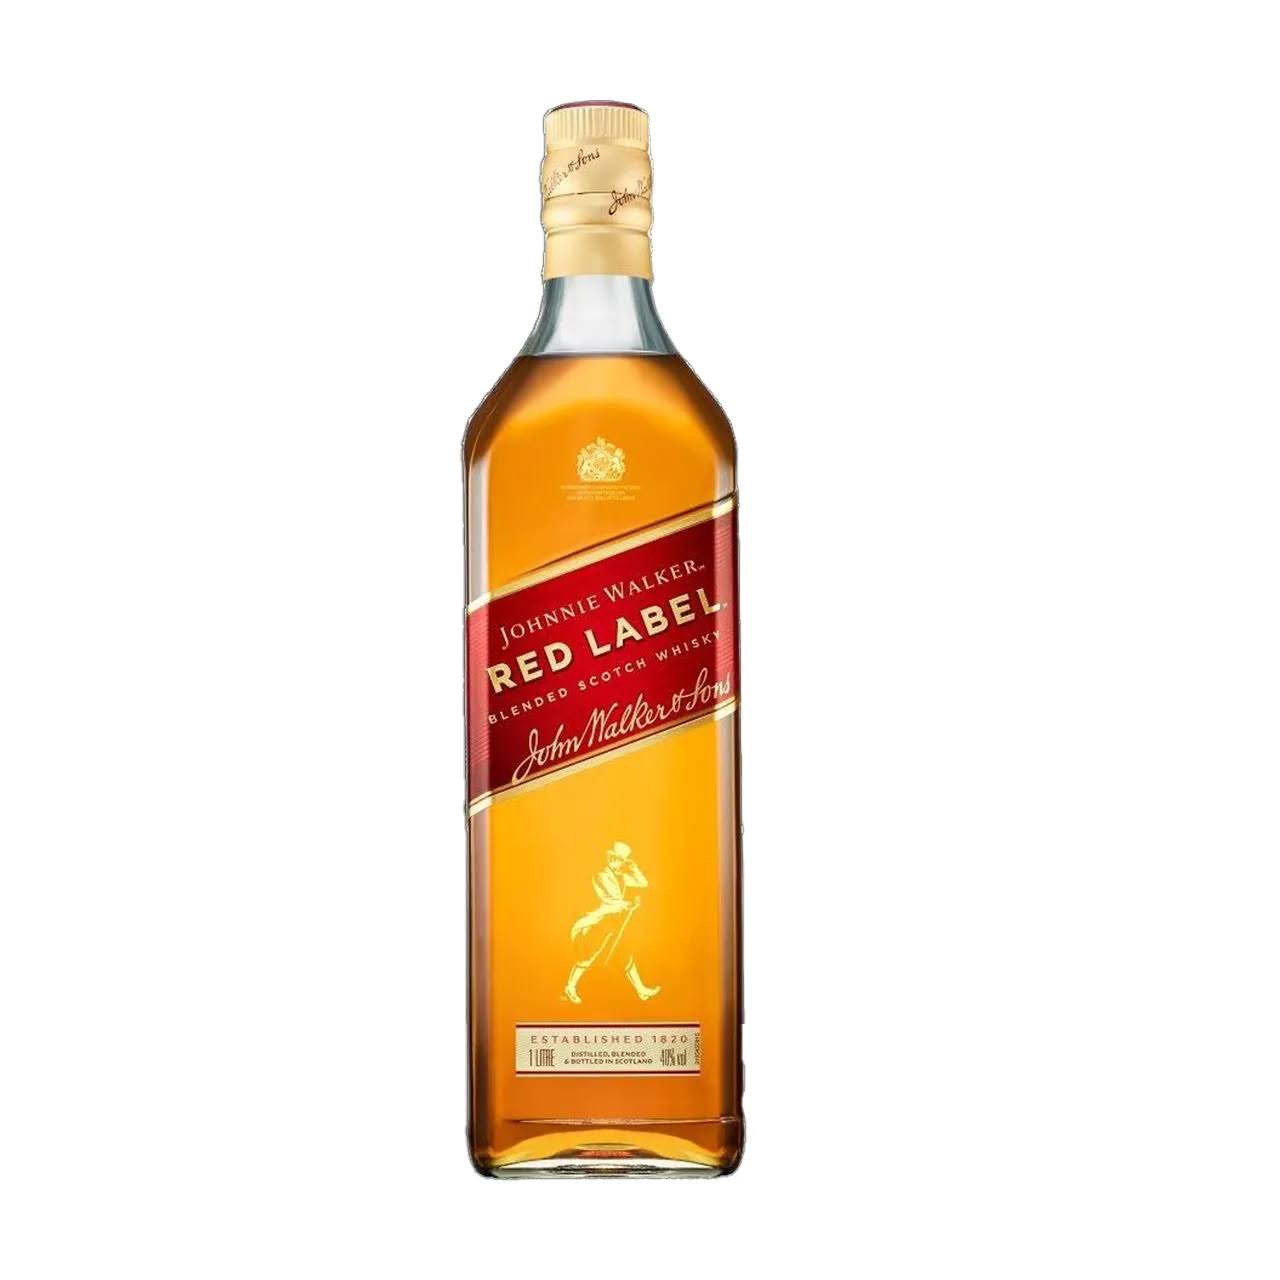 Johnnie Walker Red Label Scotch Whisky - 1l